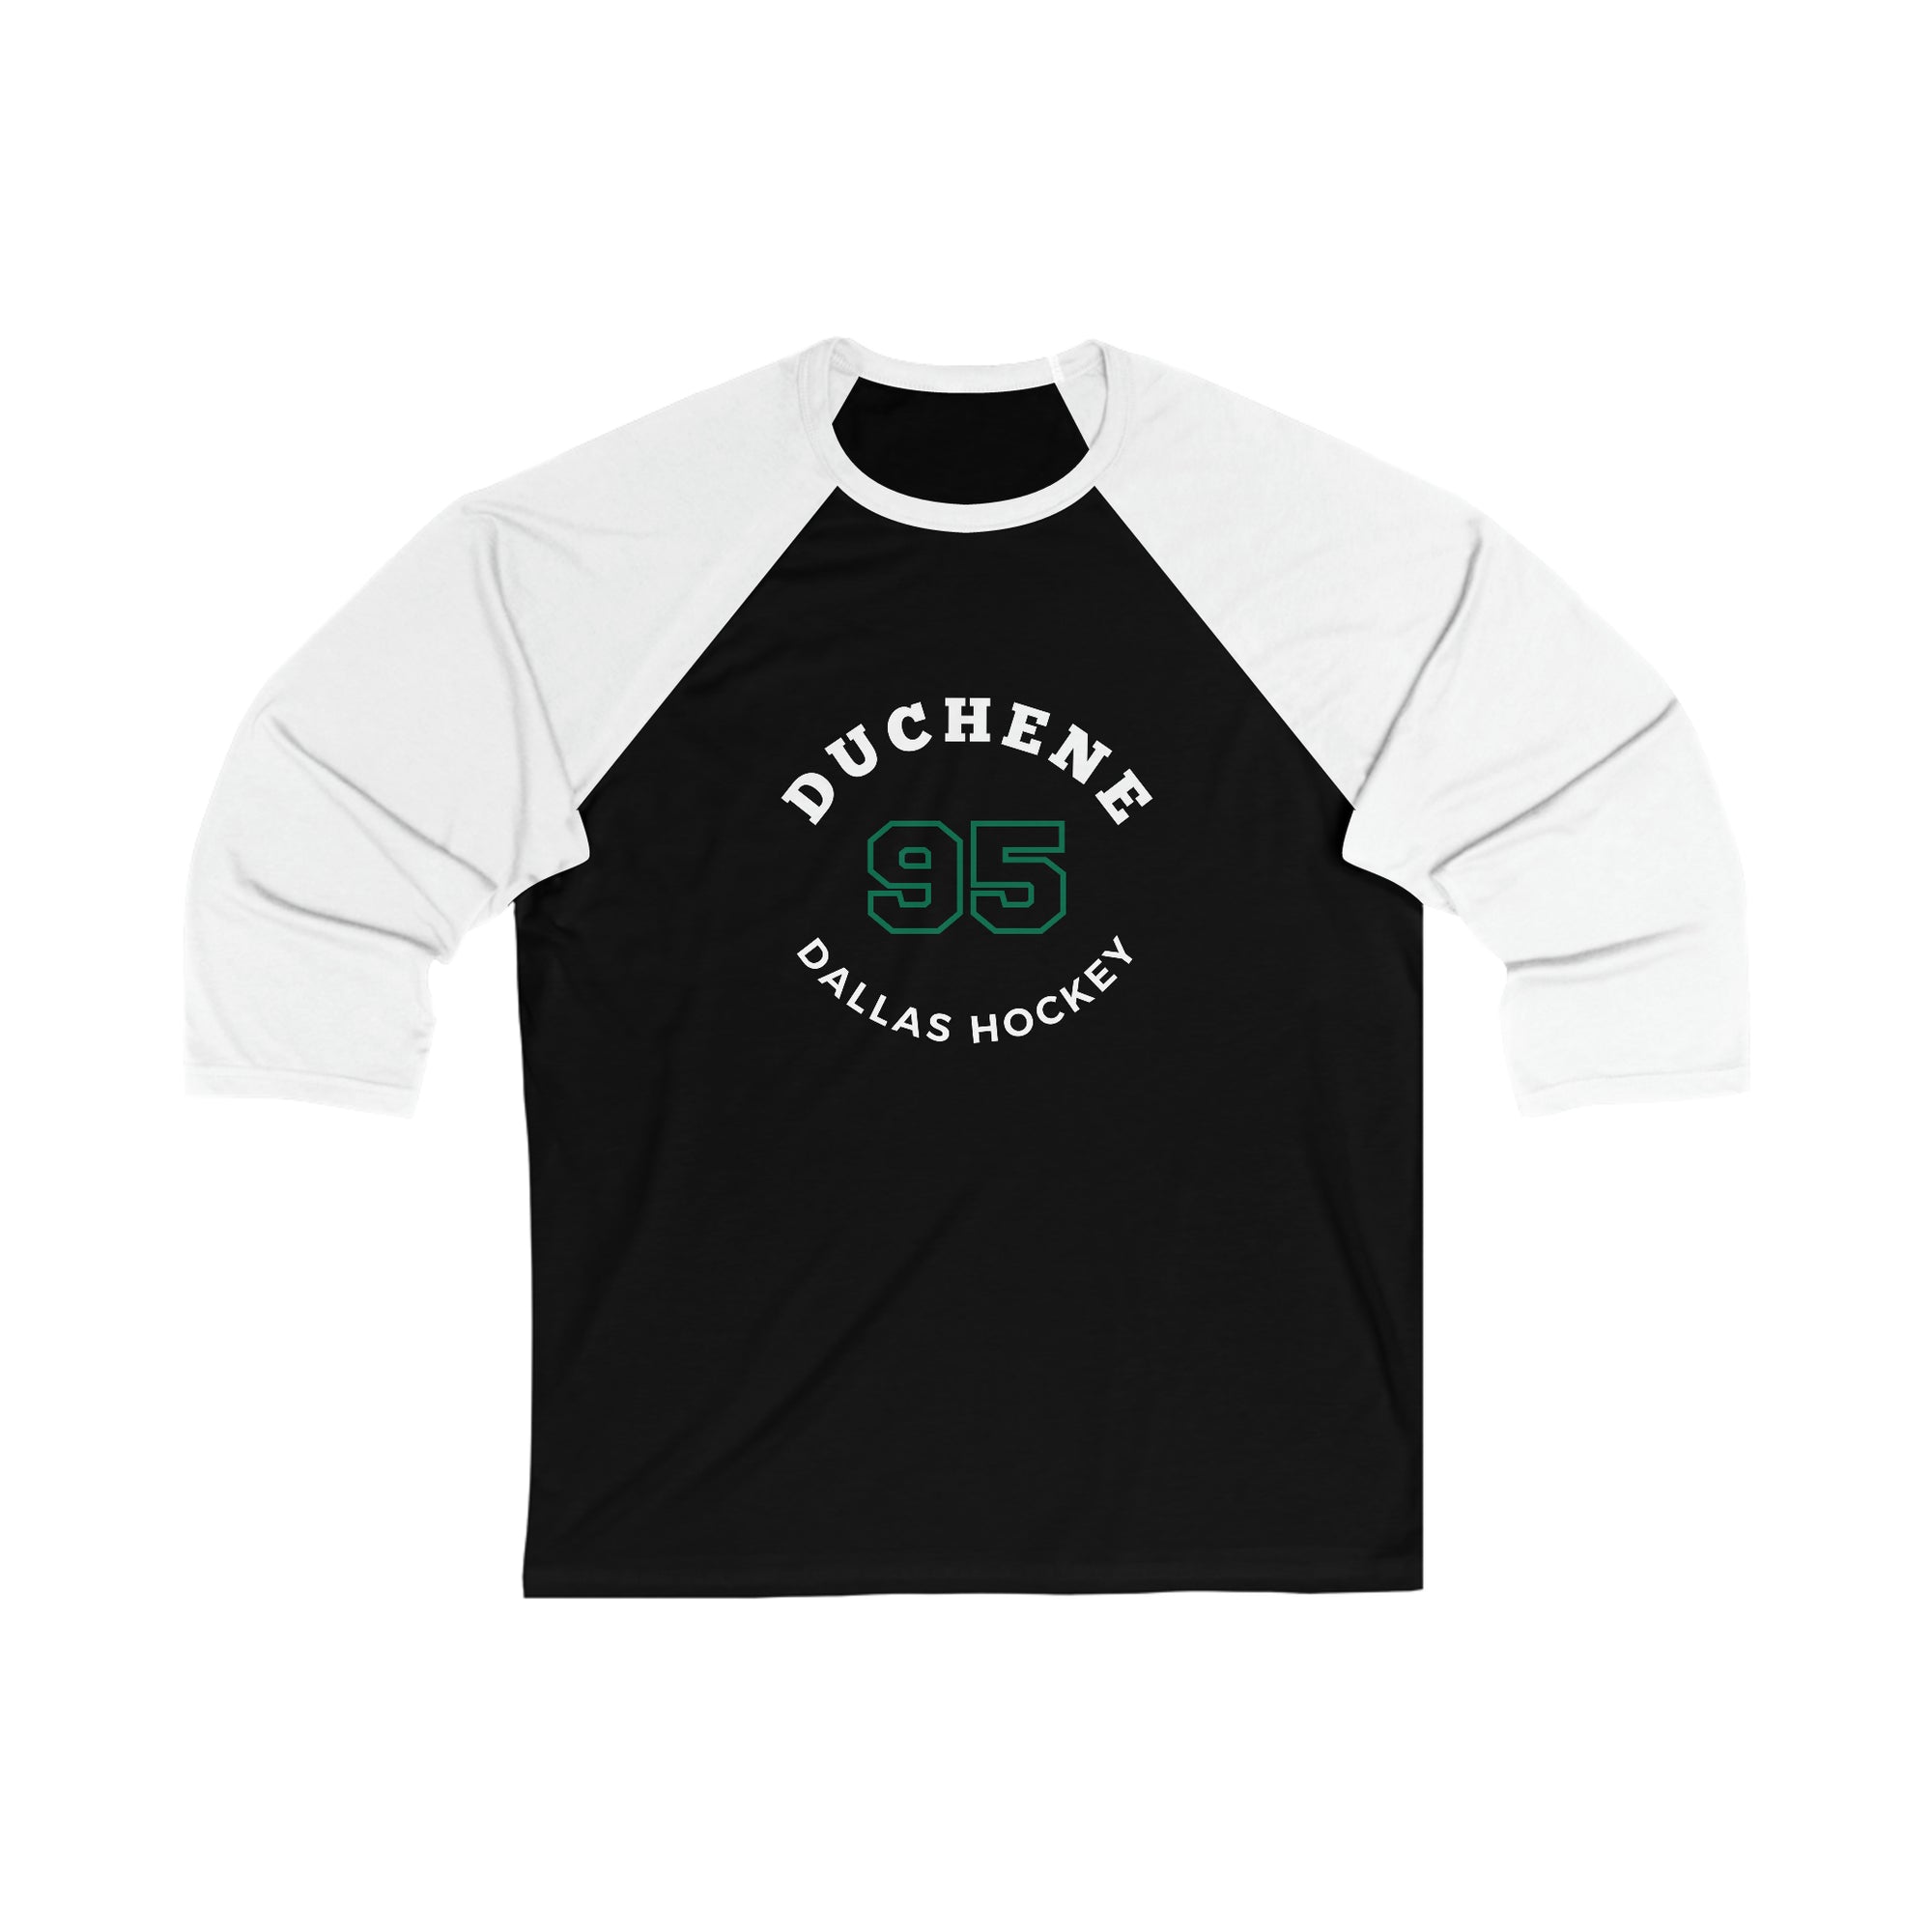 Duchene 95 Dallas Hockey Number Arch Design Unisex Tri-Blend 3/4 Sleeve Raglan Baseball Shirt